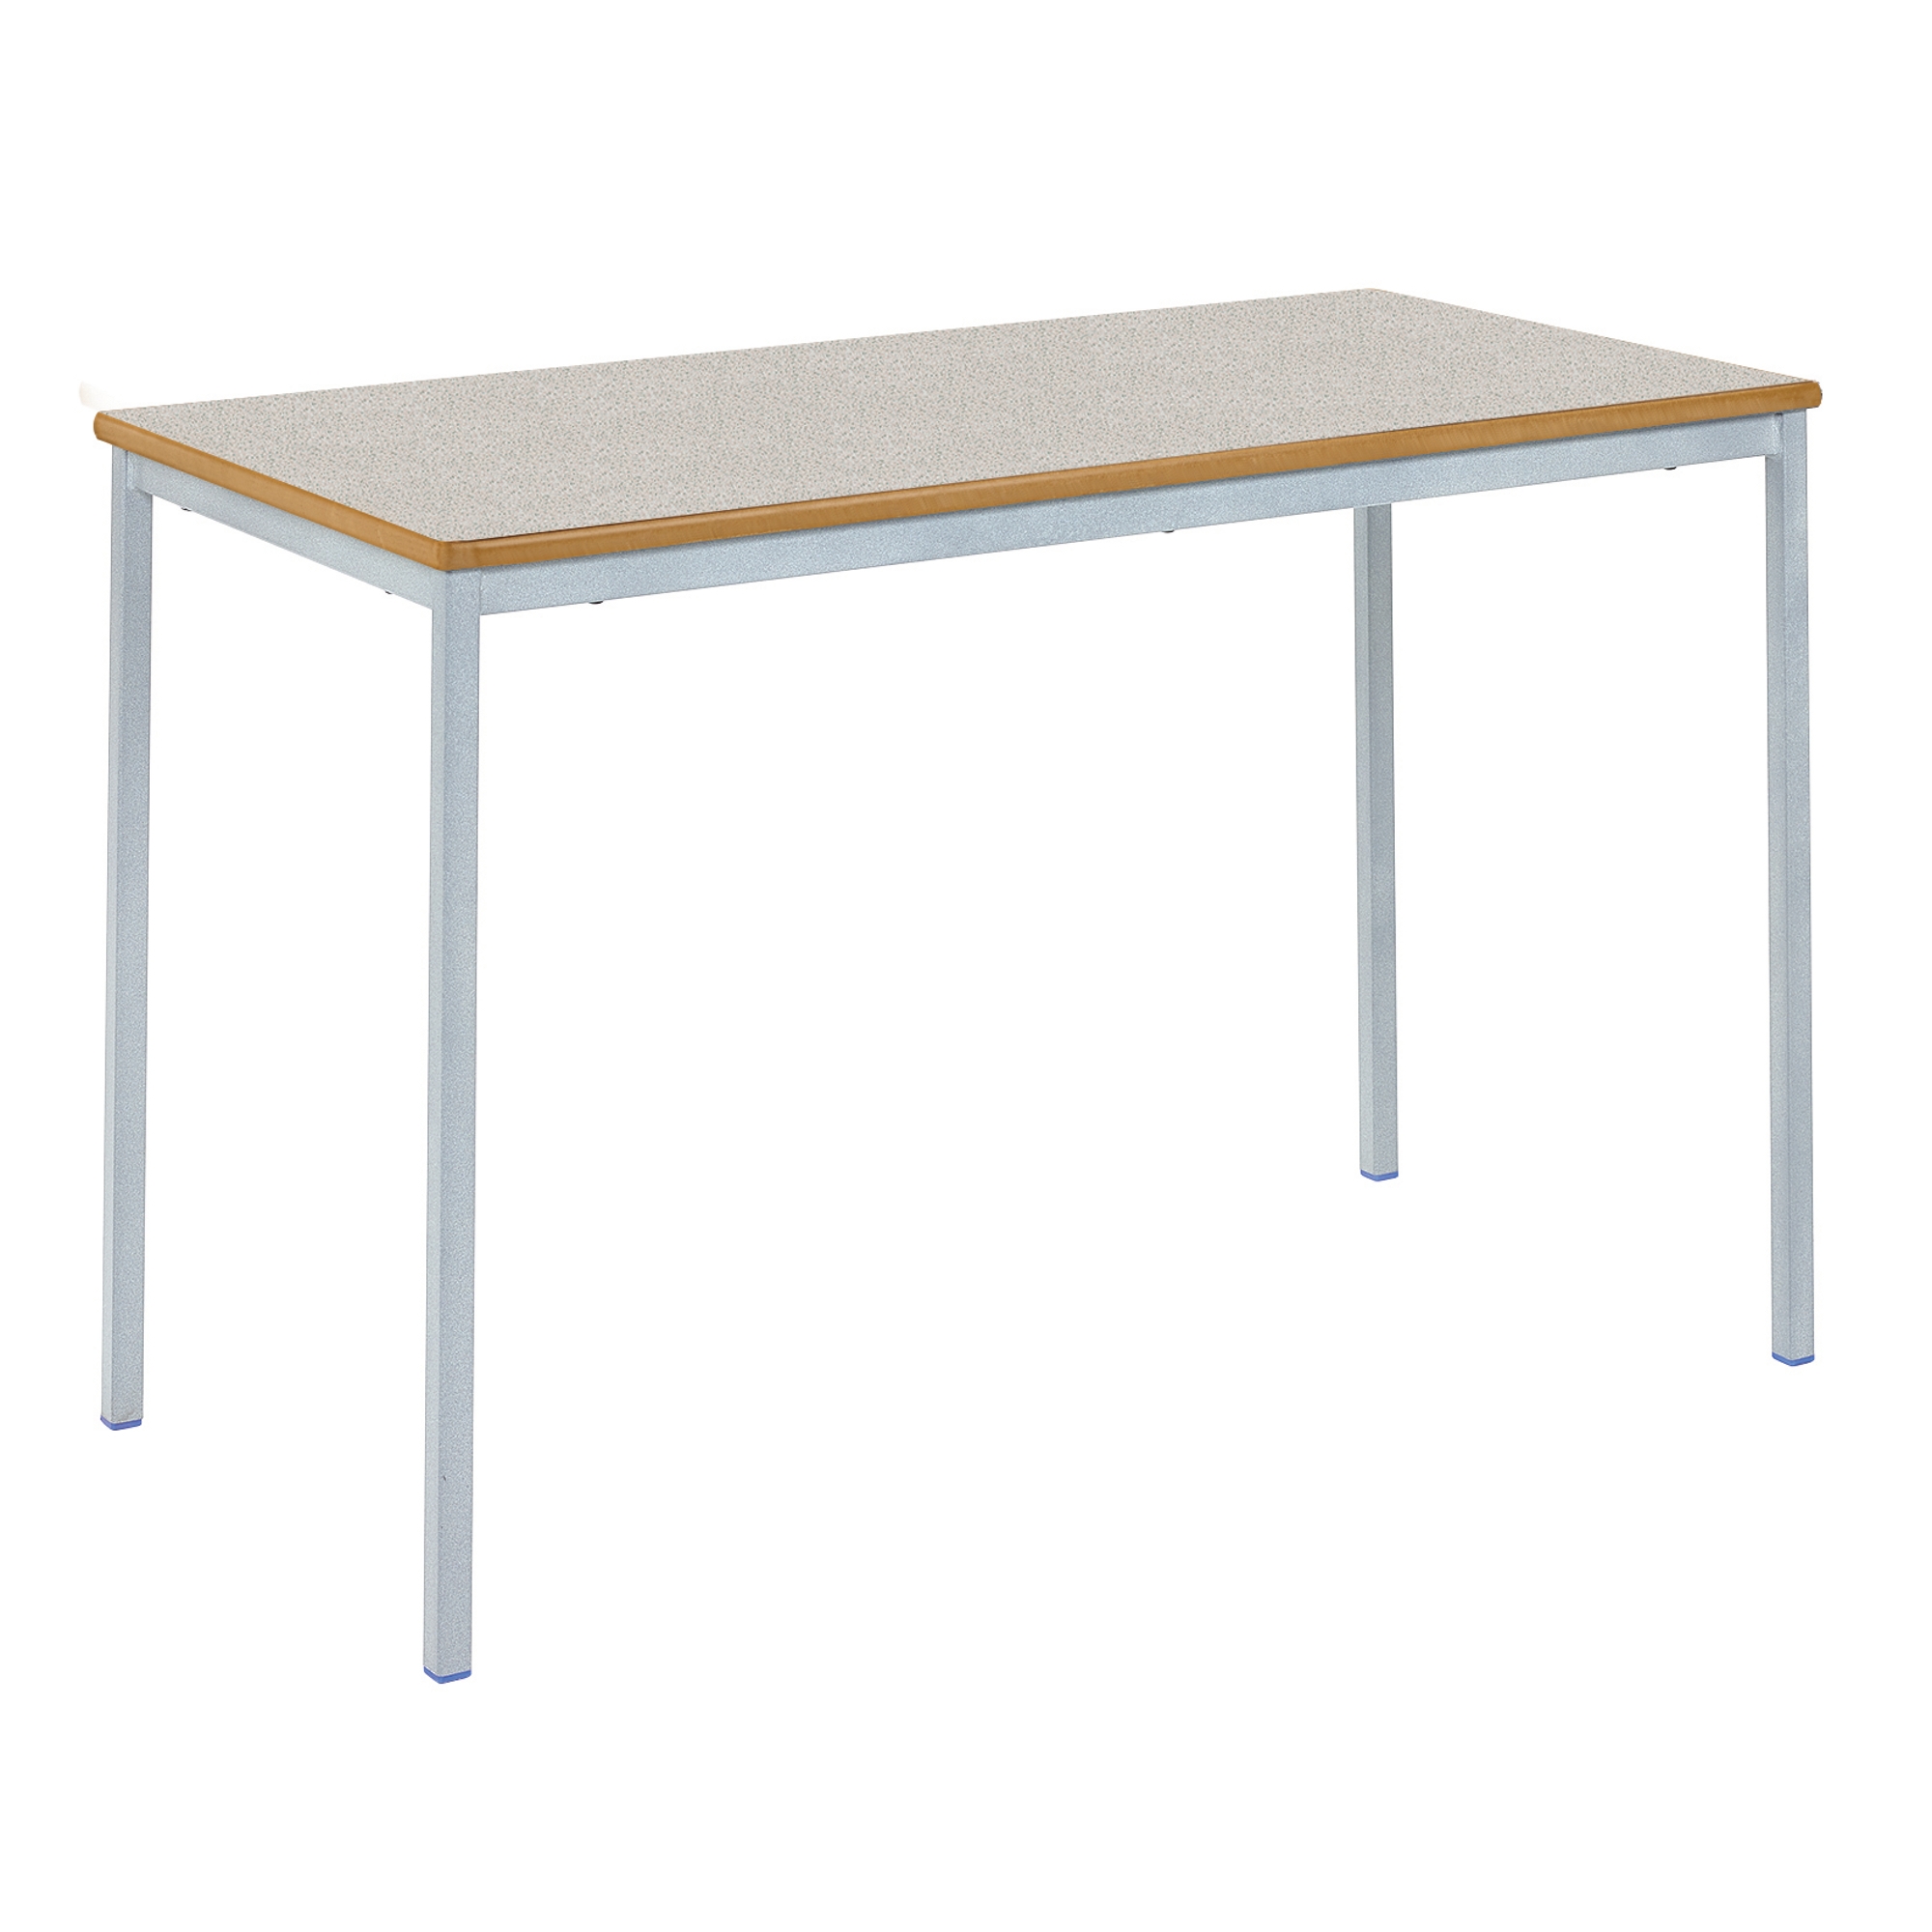 Classmates Rectangular Fully Welded Classroom Table - 1100 x 550 x 460mm - Ailsa